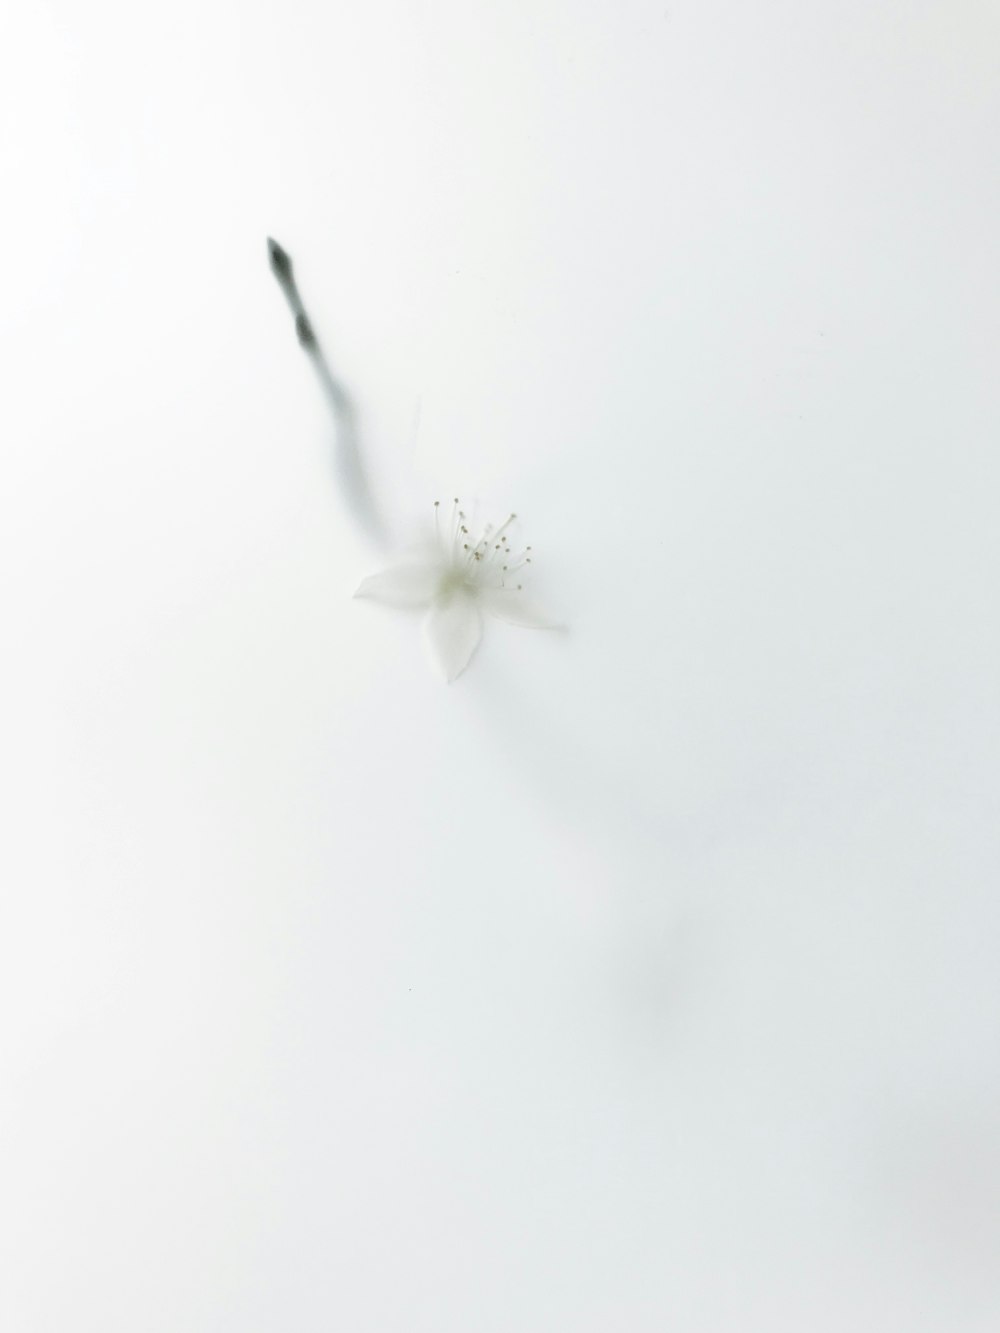 white flower on white surface